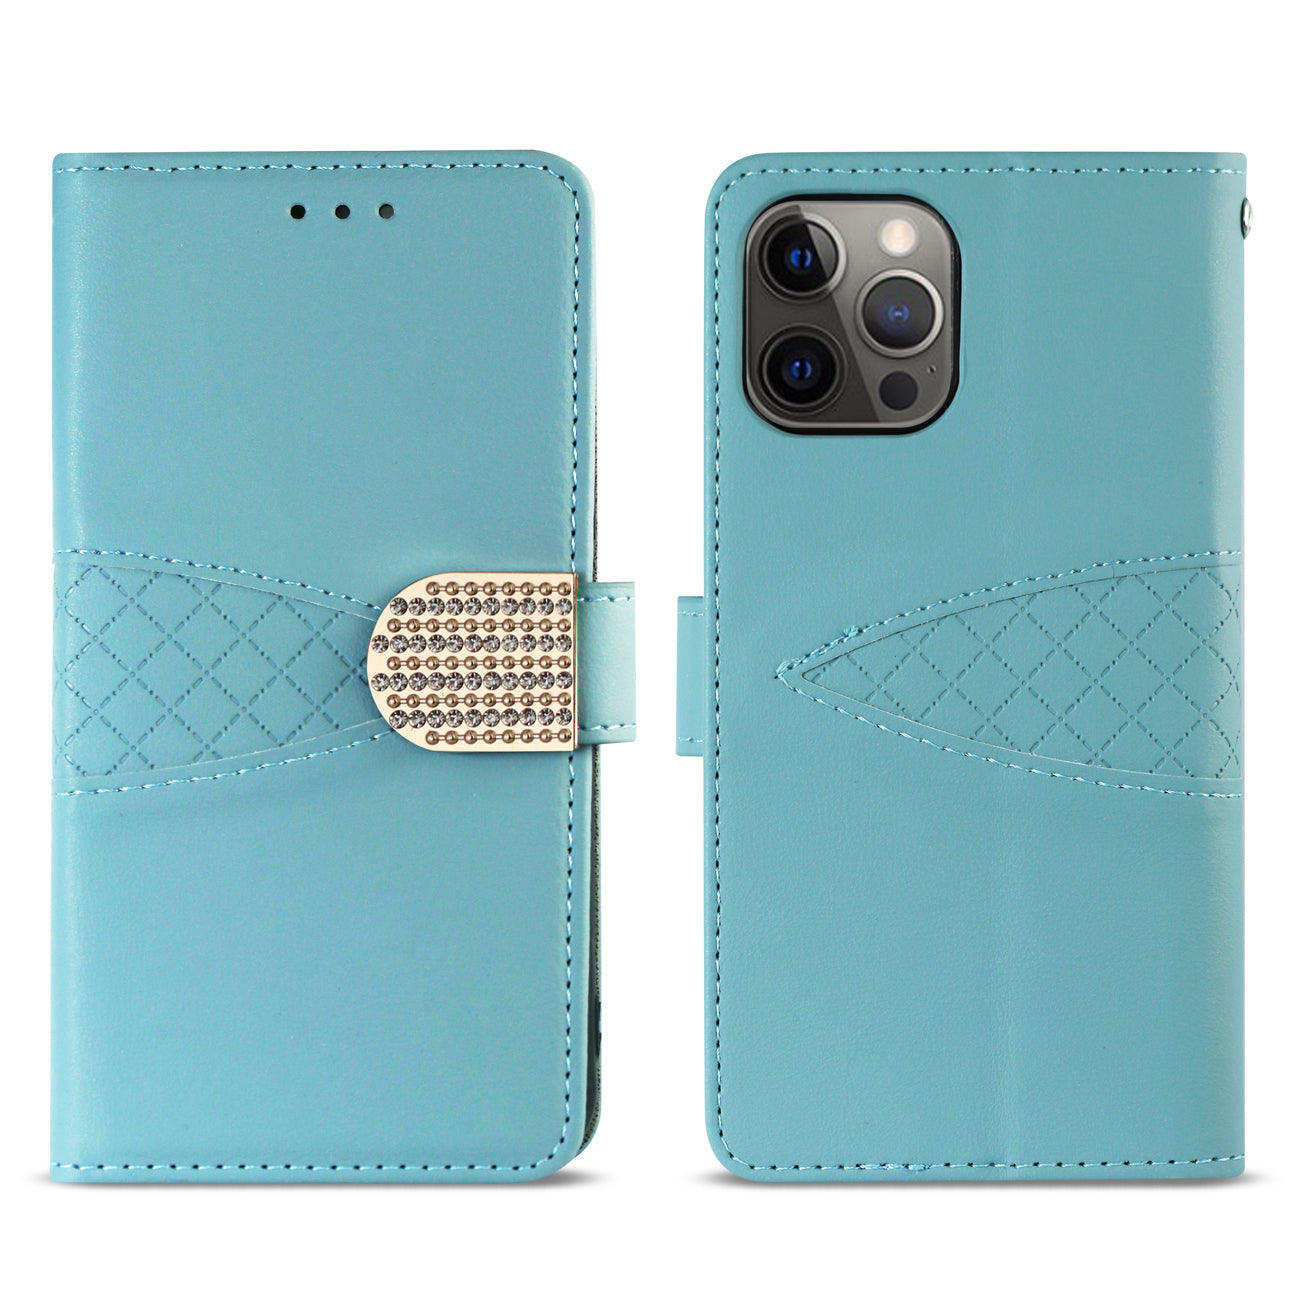 Reiko 3-In-1 Wallet CaseAPPLE IPHONE 12 PRO MAX In Blue